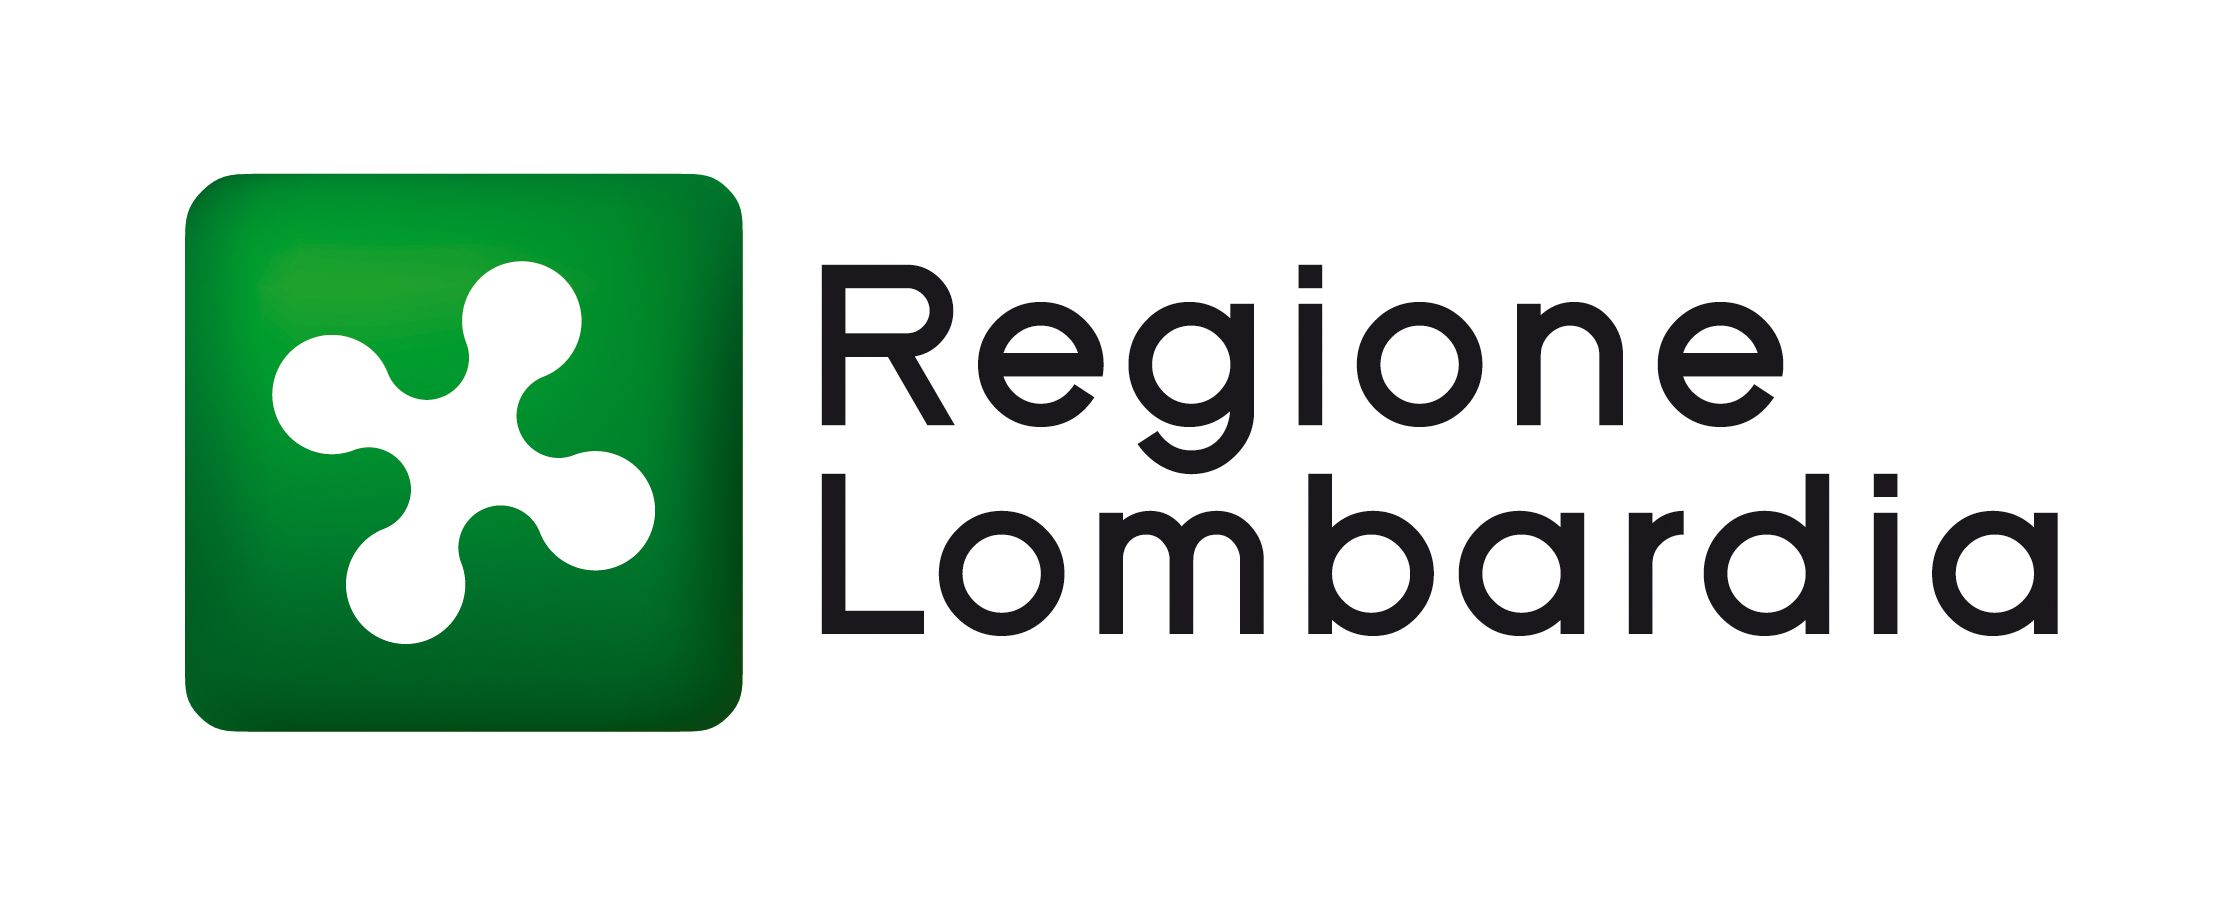 Logo_REG_LOMBARDIA_oriz